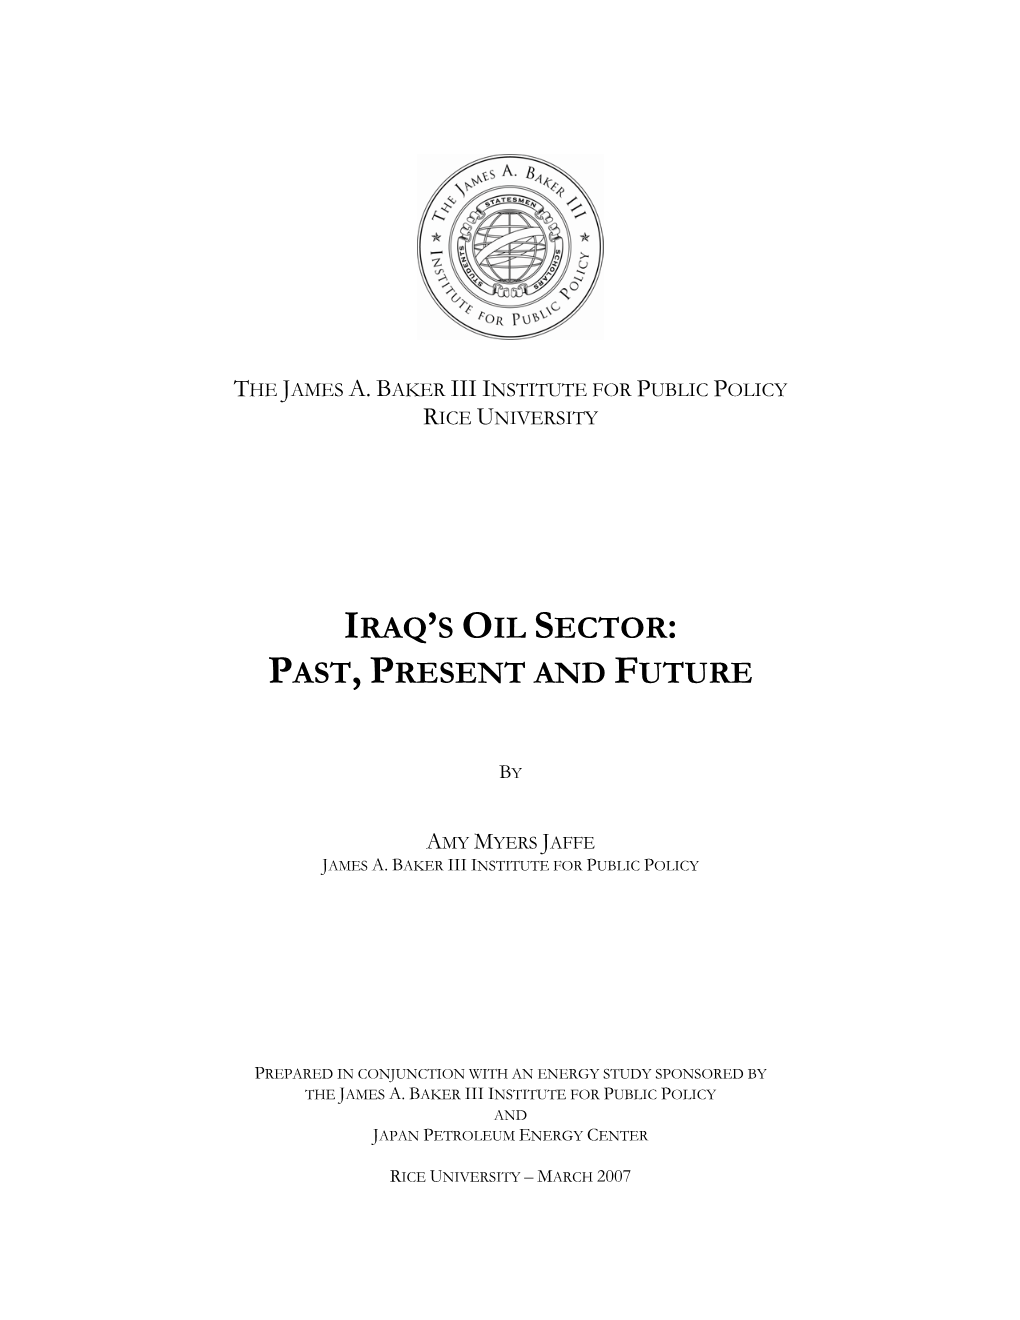 Iraq's Oil Sector: Past, Present and Future